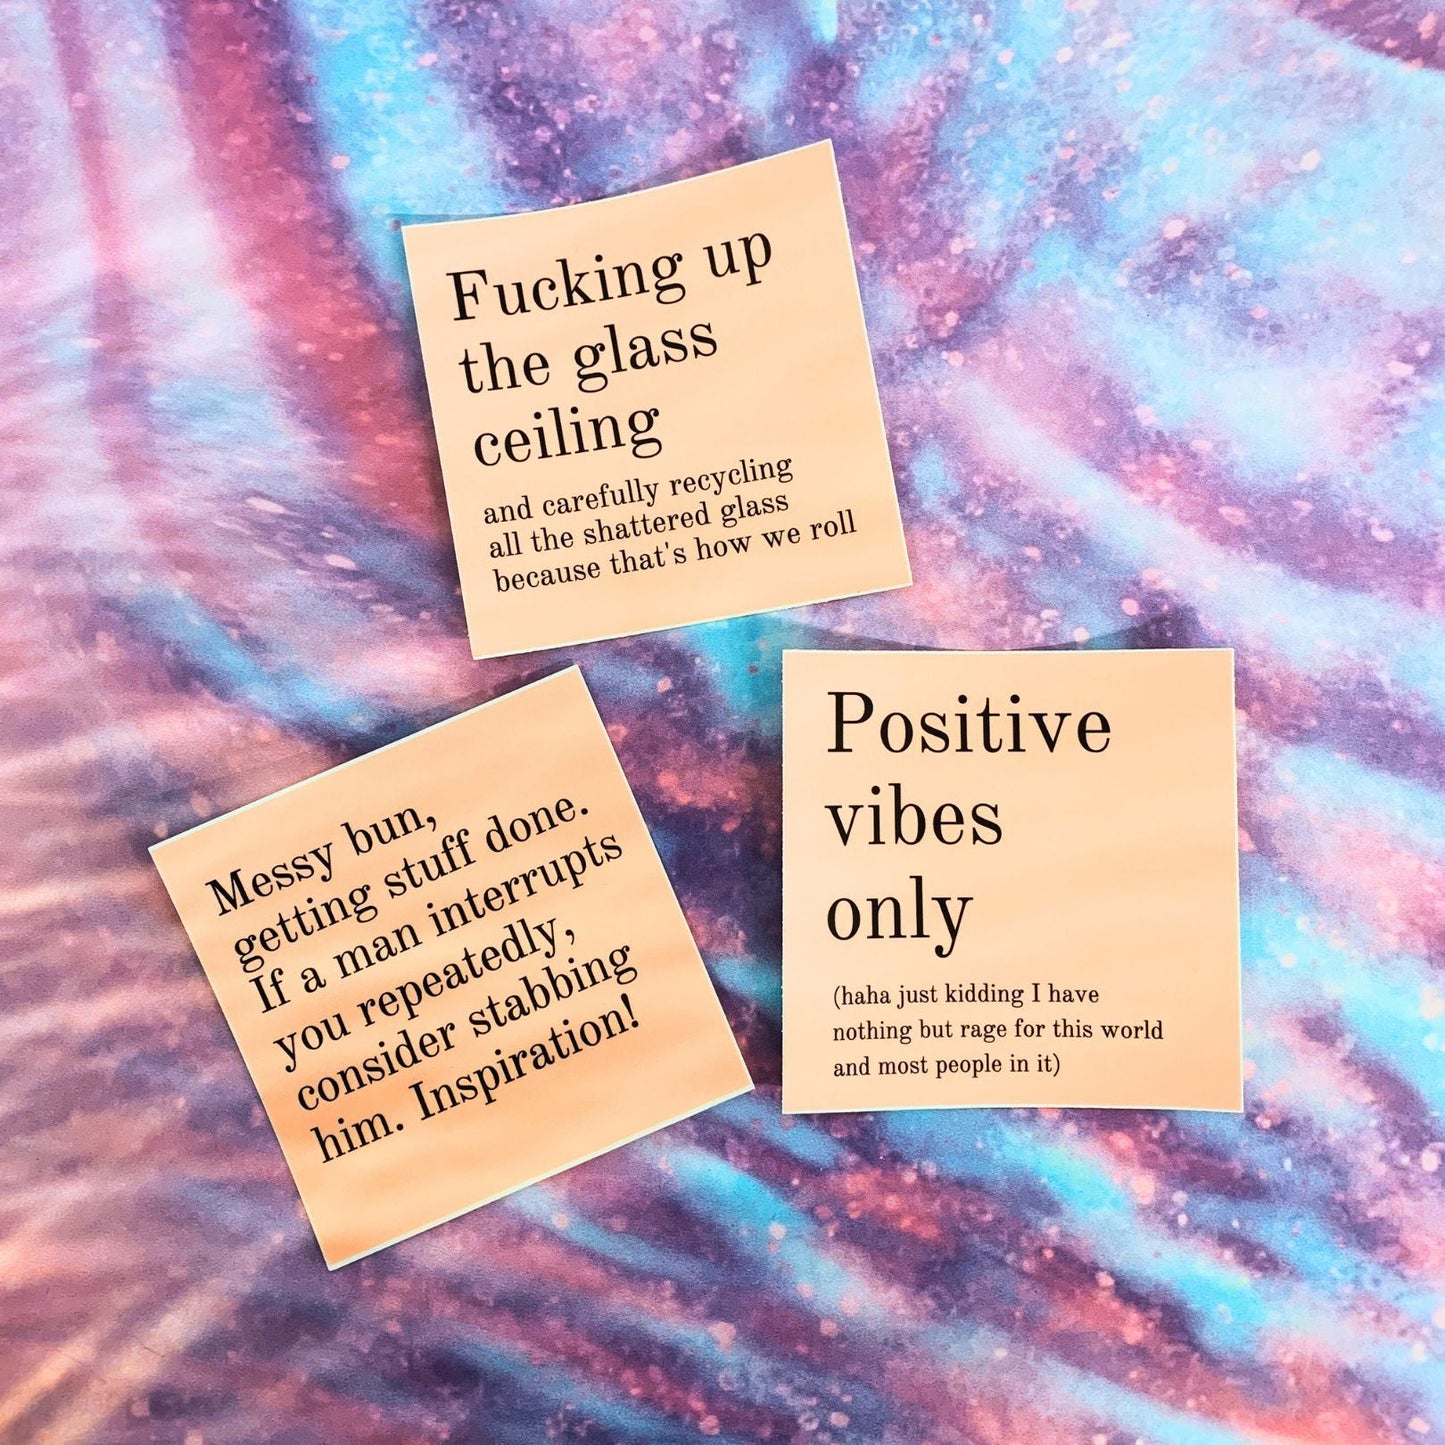 Positive Vibes Only (Plus Rage) Vinyl Weatherproof Sticker in Blush Pink